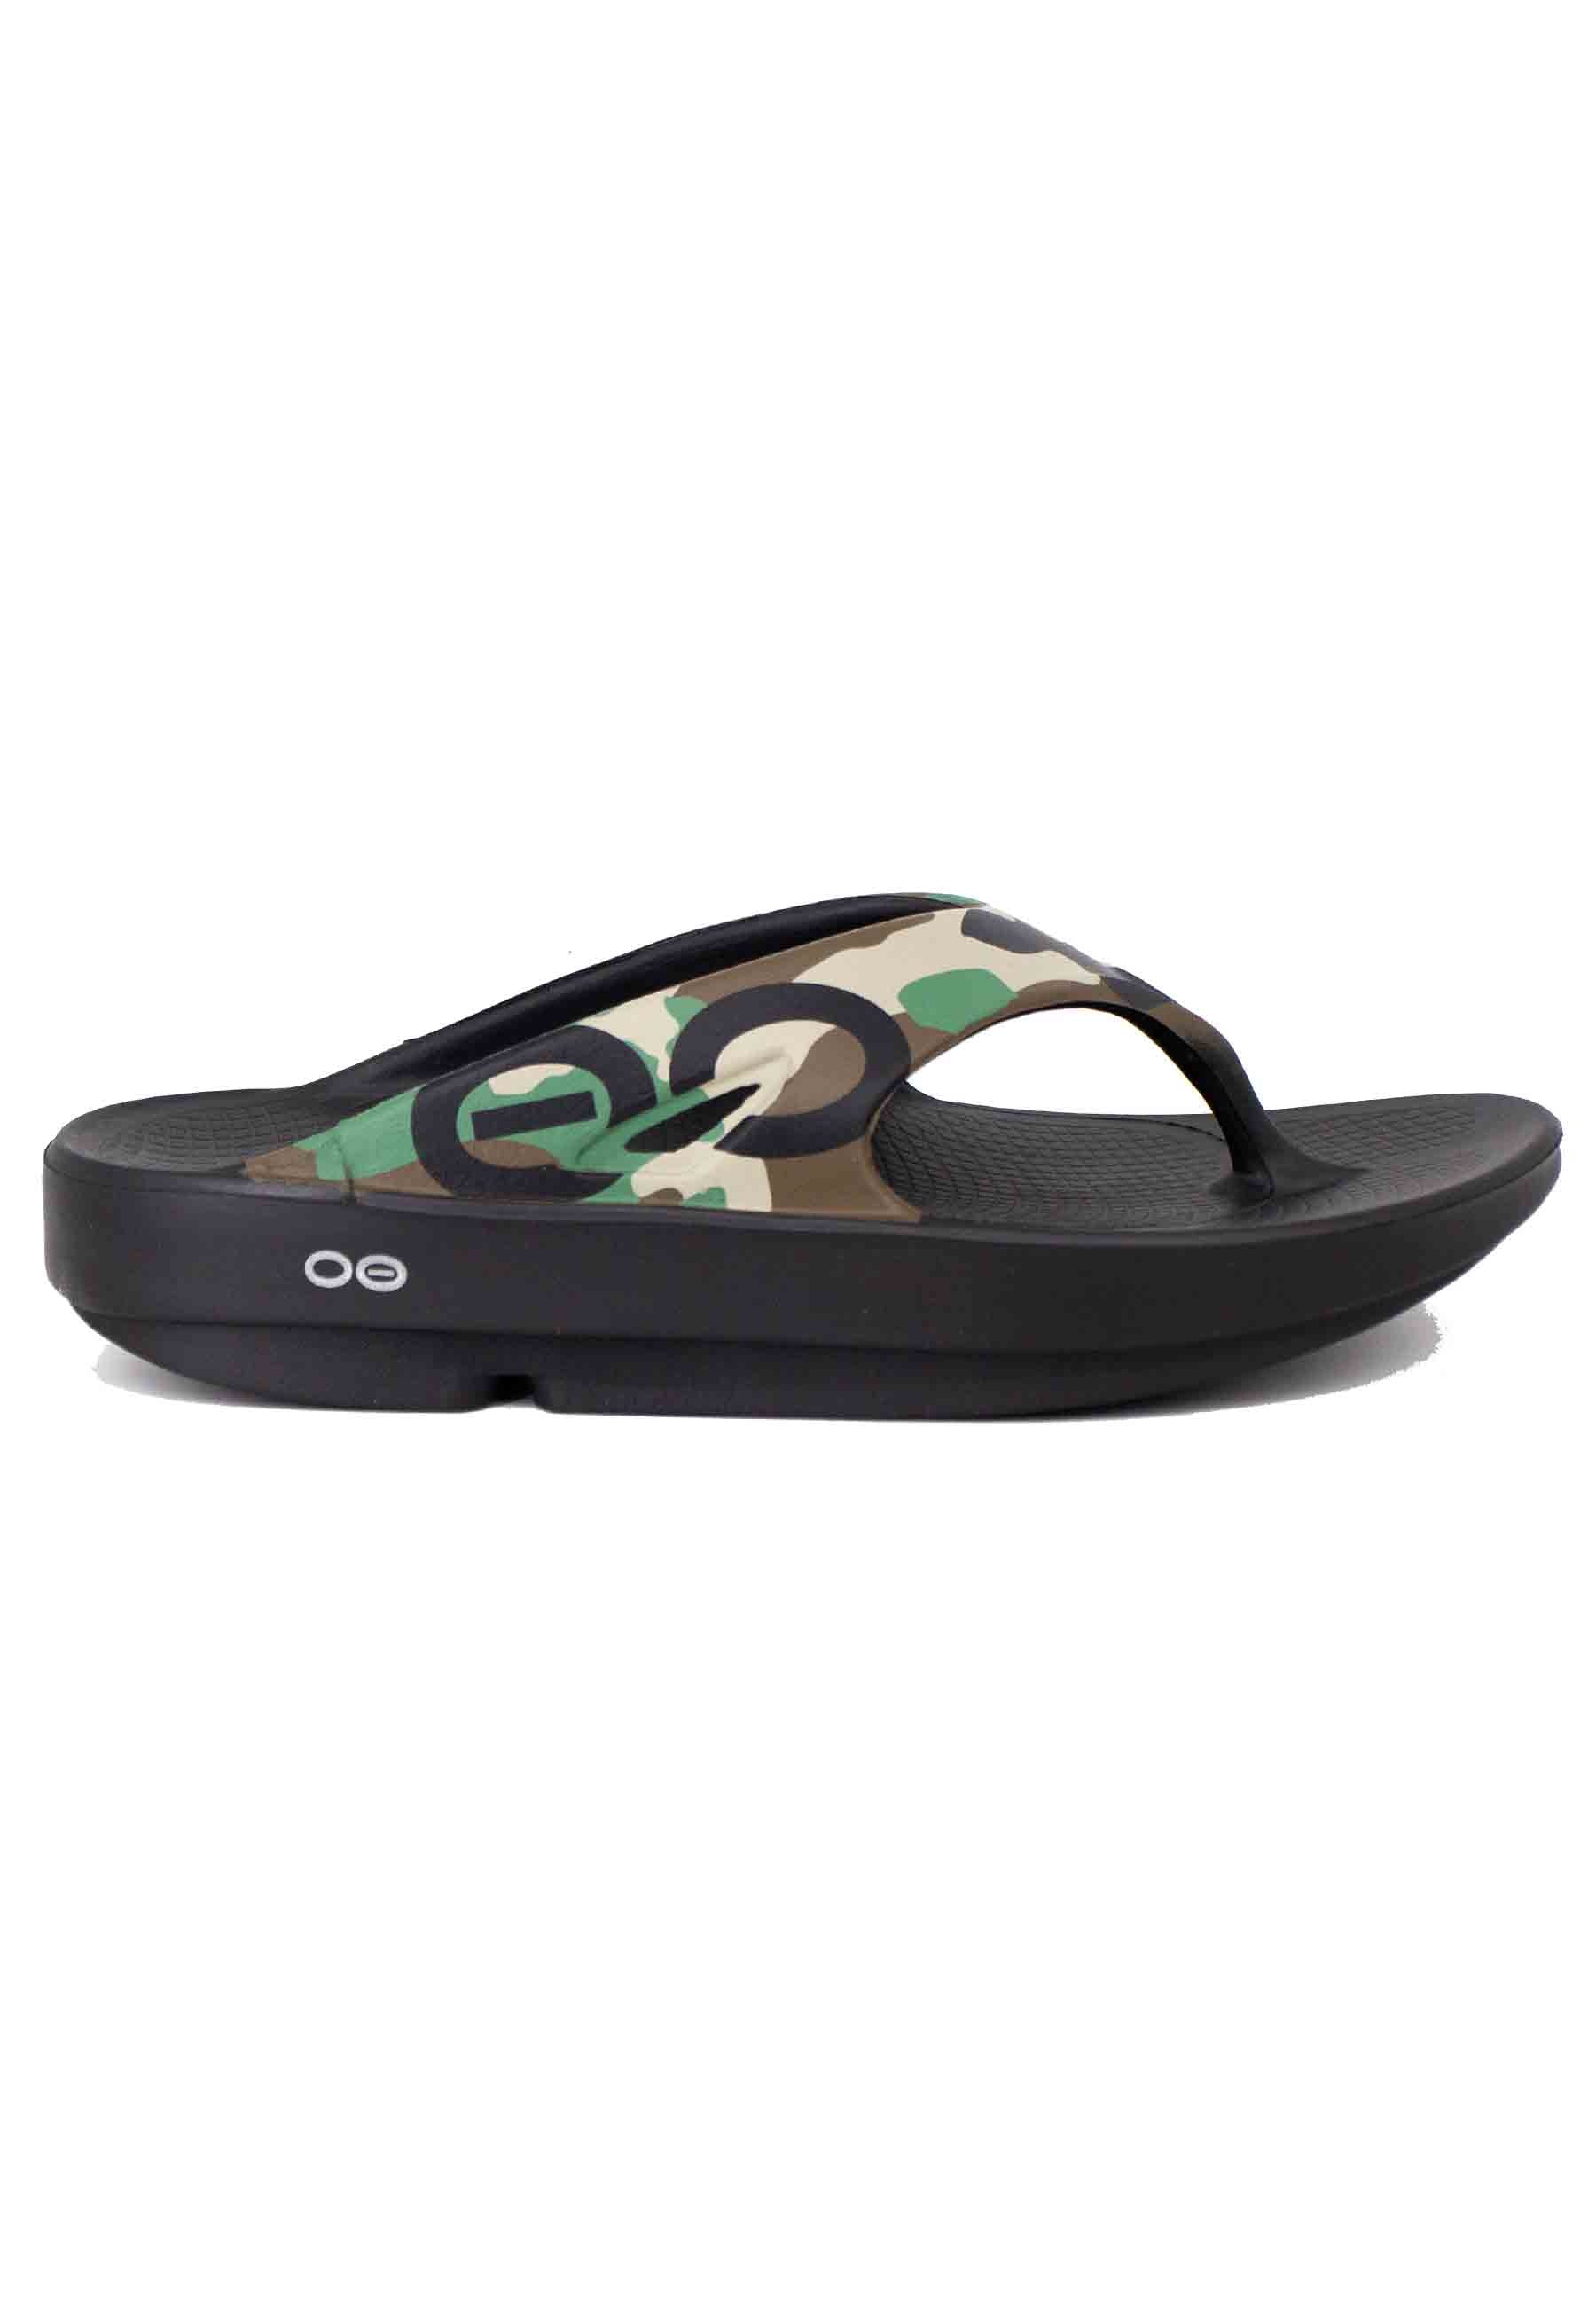 Men's flip-flop sandals in soft foam with camouflage print